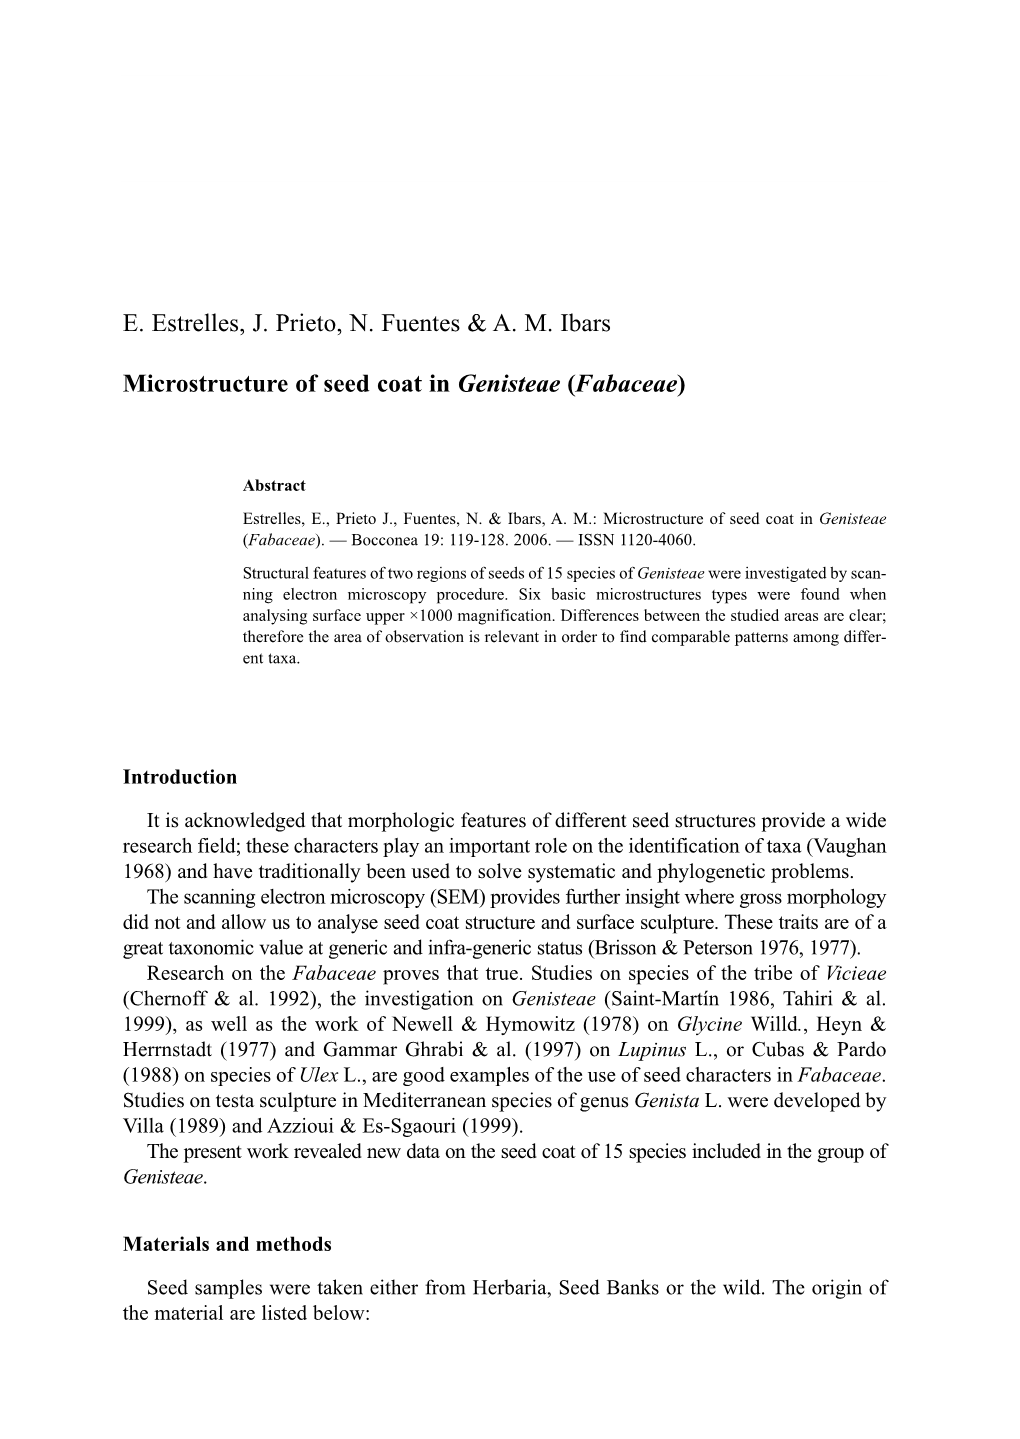 E. Estrelles, J. Prieto, N. Fuentes & A. M. Ibars Microstructure of Seed